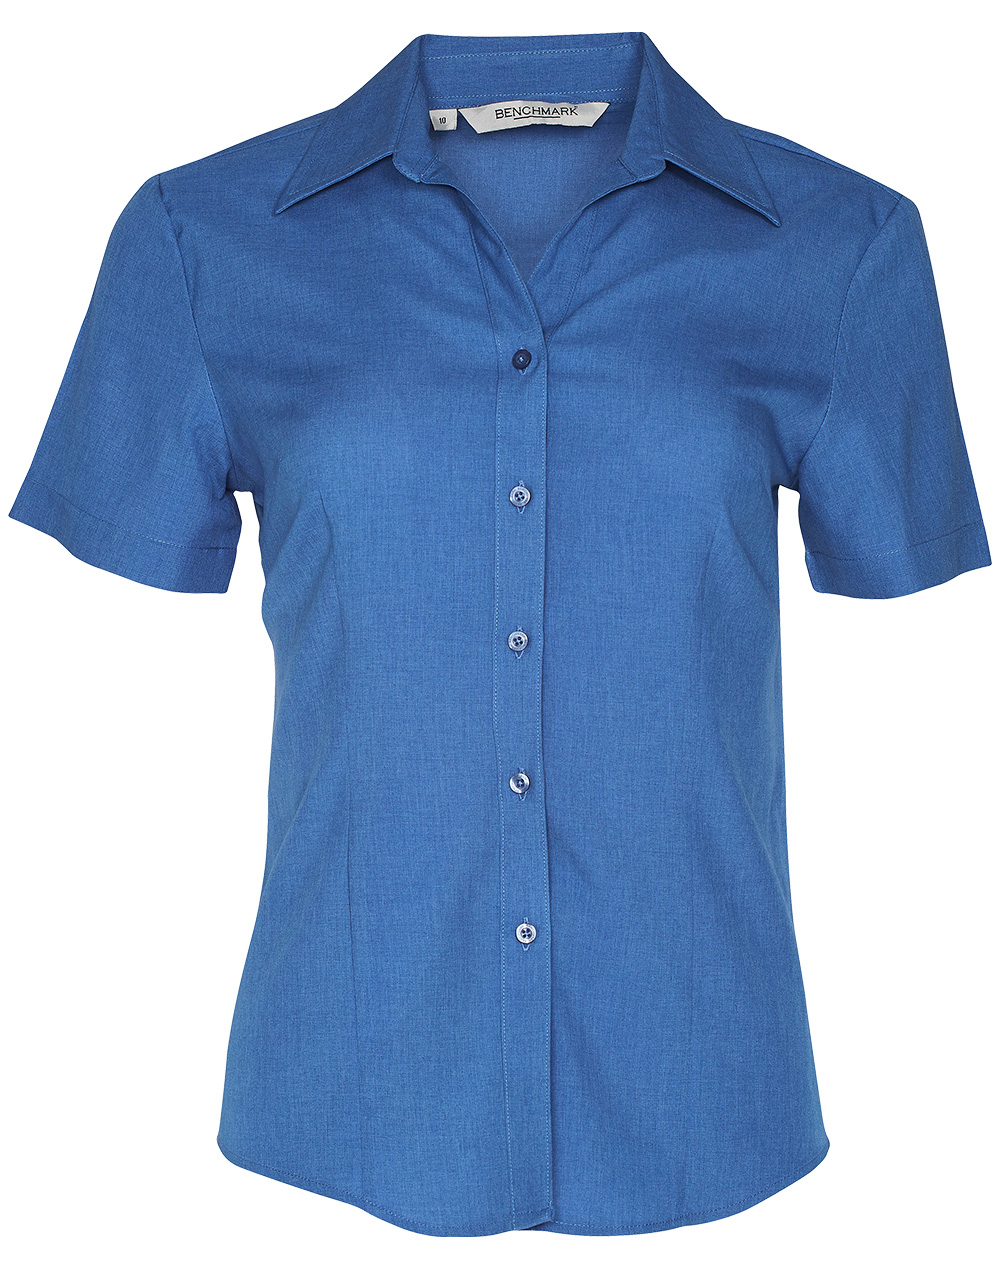 M8600S Women’s CoolDry Short Sleeve Shirt